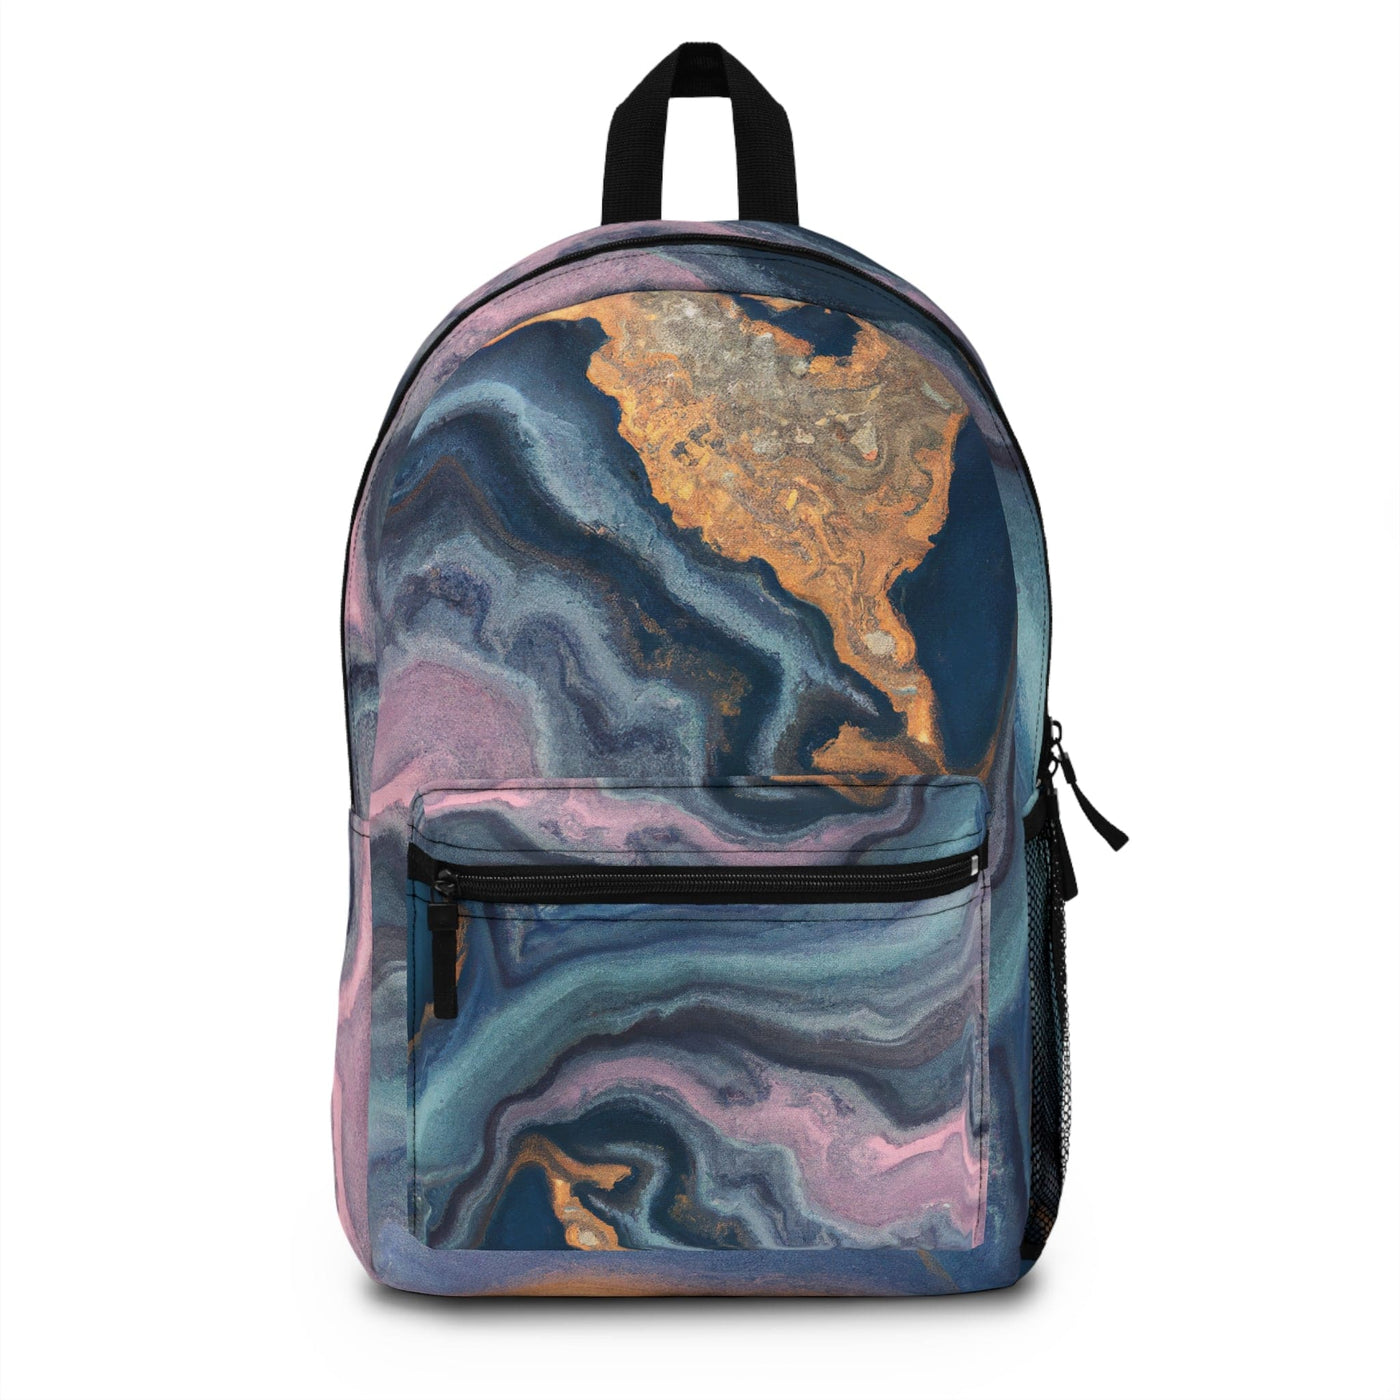 Backpack Work/school/leisure - Waterproof Blue Pink Gold Abstract Marble Swirl